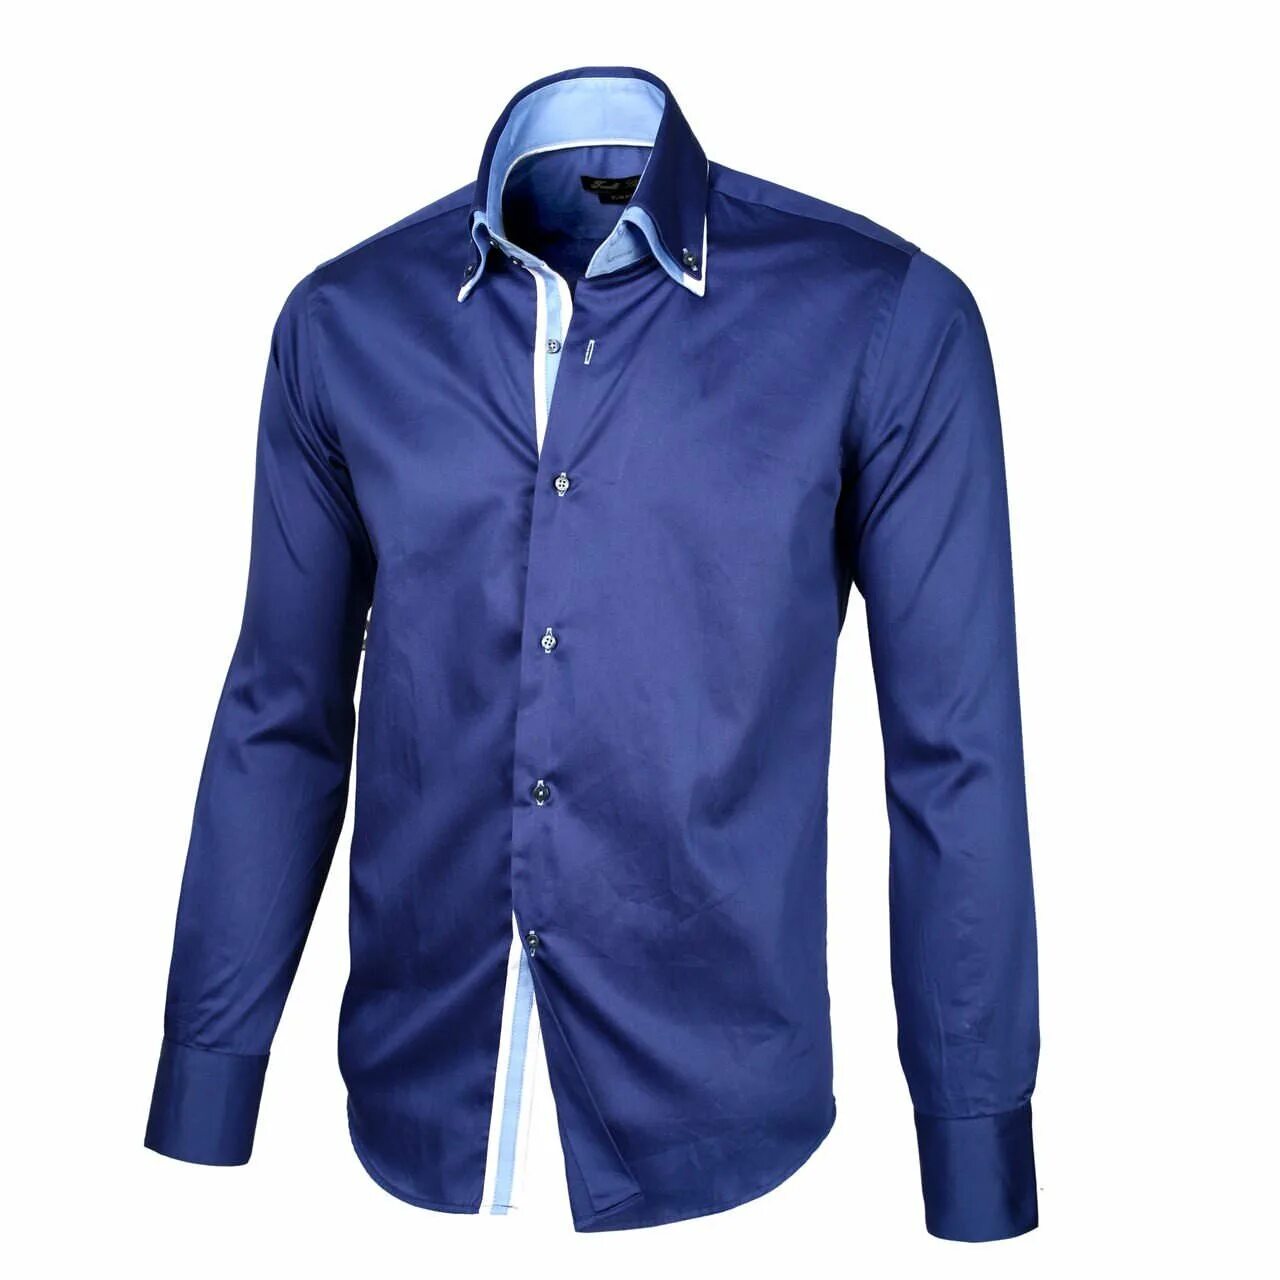 Рубашки мужские купить недорого москва. Рубашка мужская Mavi m021190-80692. Синяя рубашка. Синяя рубашка мужская. Красивые рубашки для мужчин.